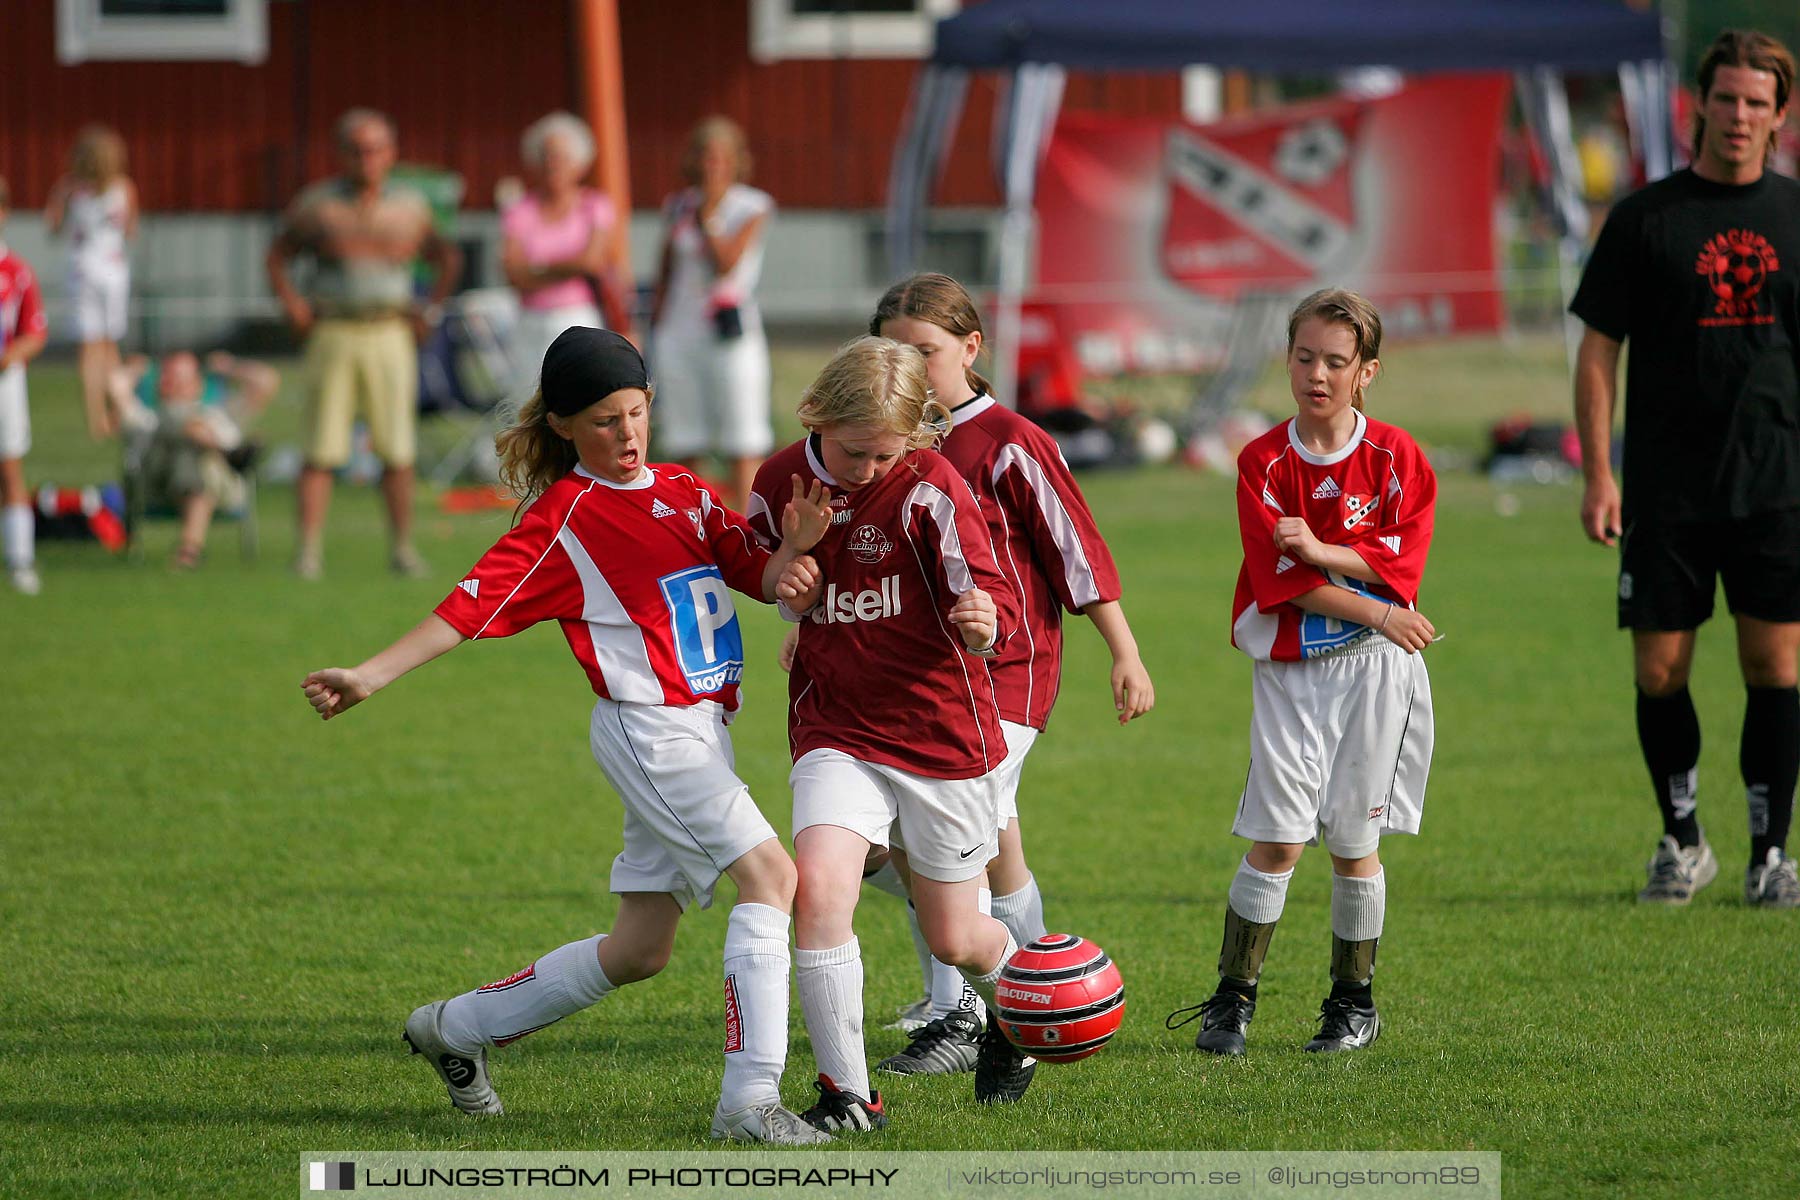 Ulvacupen 2006,mix,Åbrovallen,Ulvåker,Sverige,Fotboll,,2006,147422